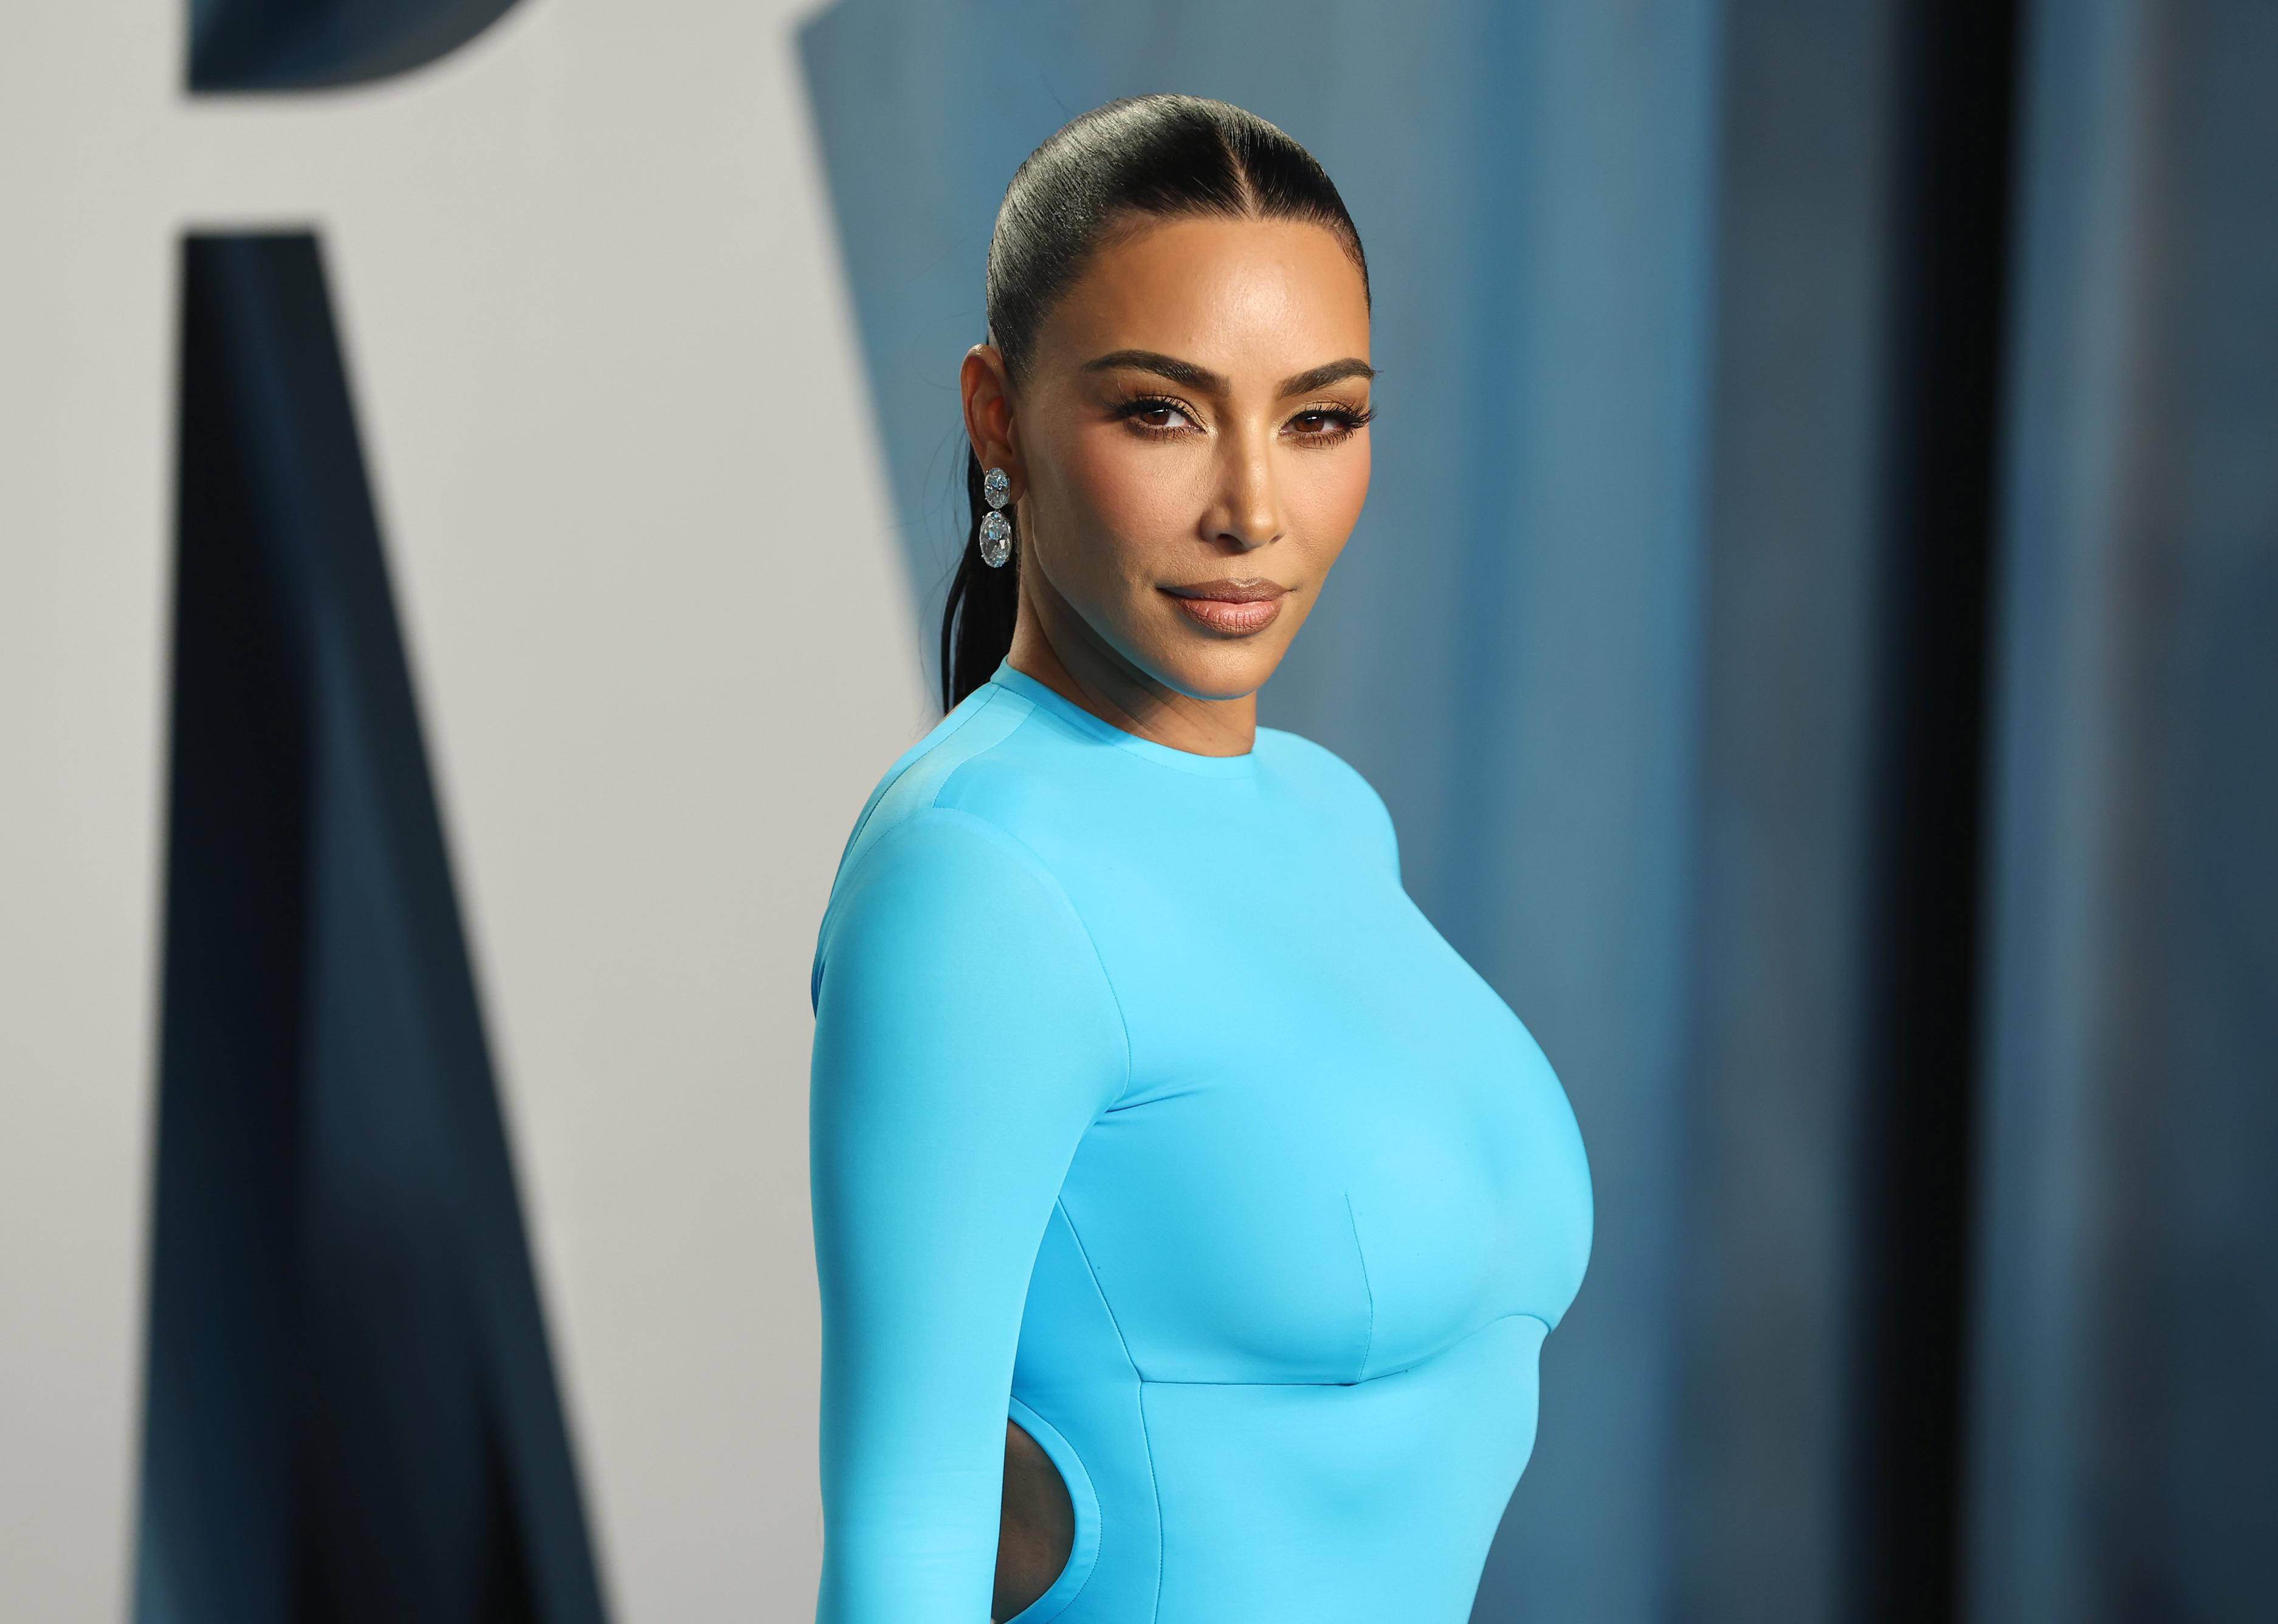 Kim Kardashian in a tight light blue outfit.